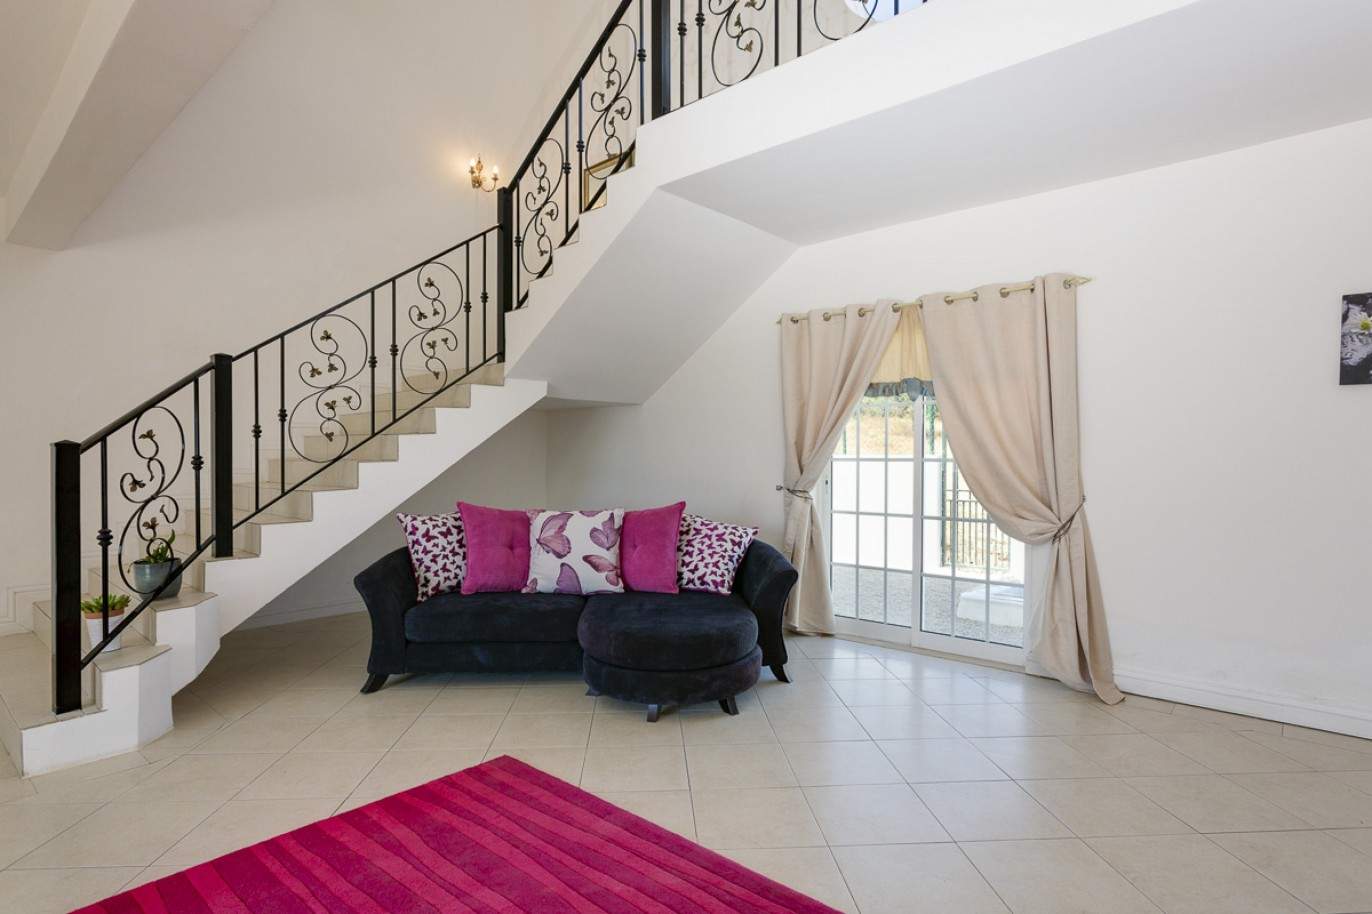 4 Bedroom Villa with sea view, for sale in Boliqueime, Algarve_209941